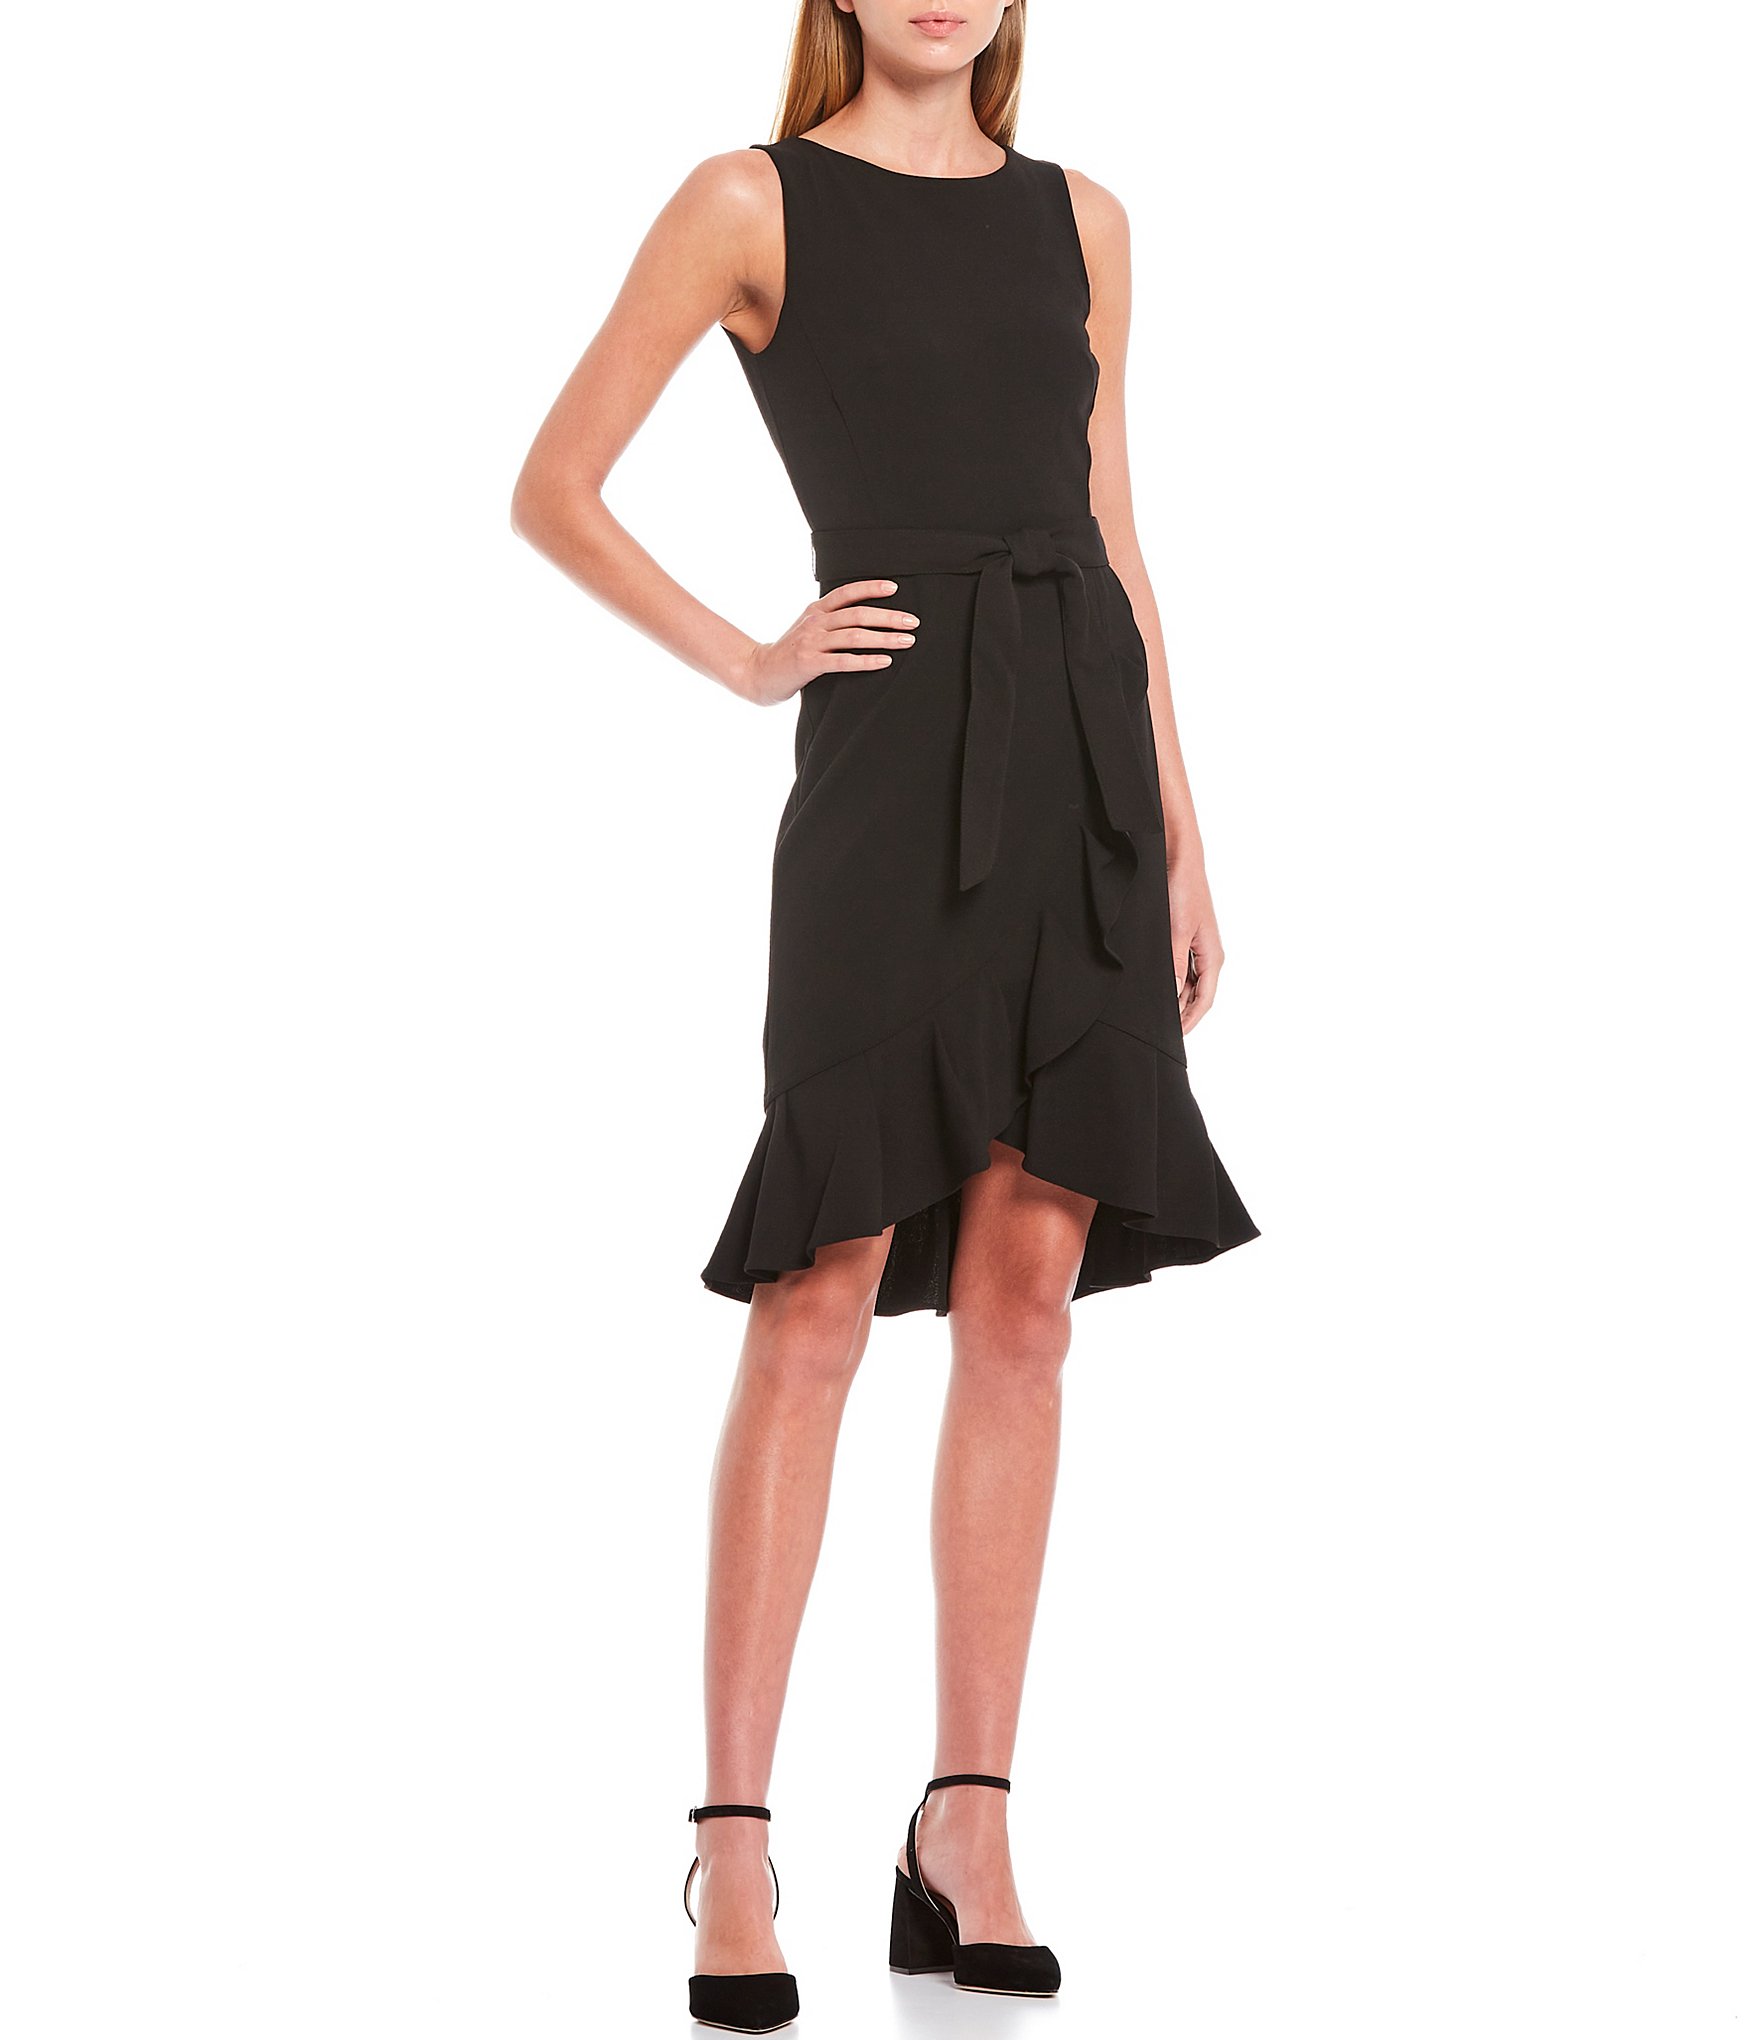 calvin klein black dress: Women's Dresses | Dillard's